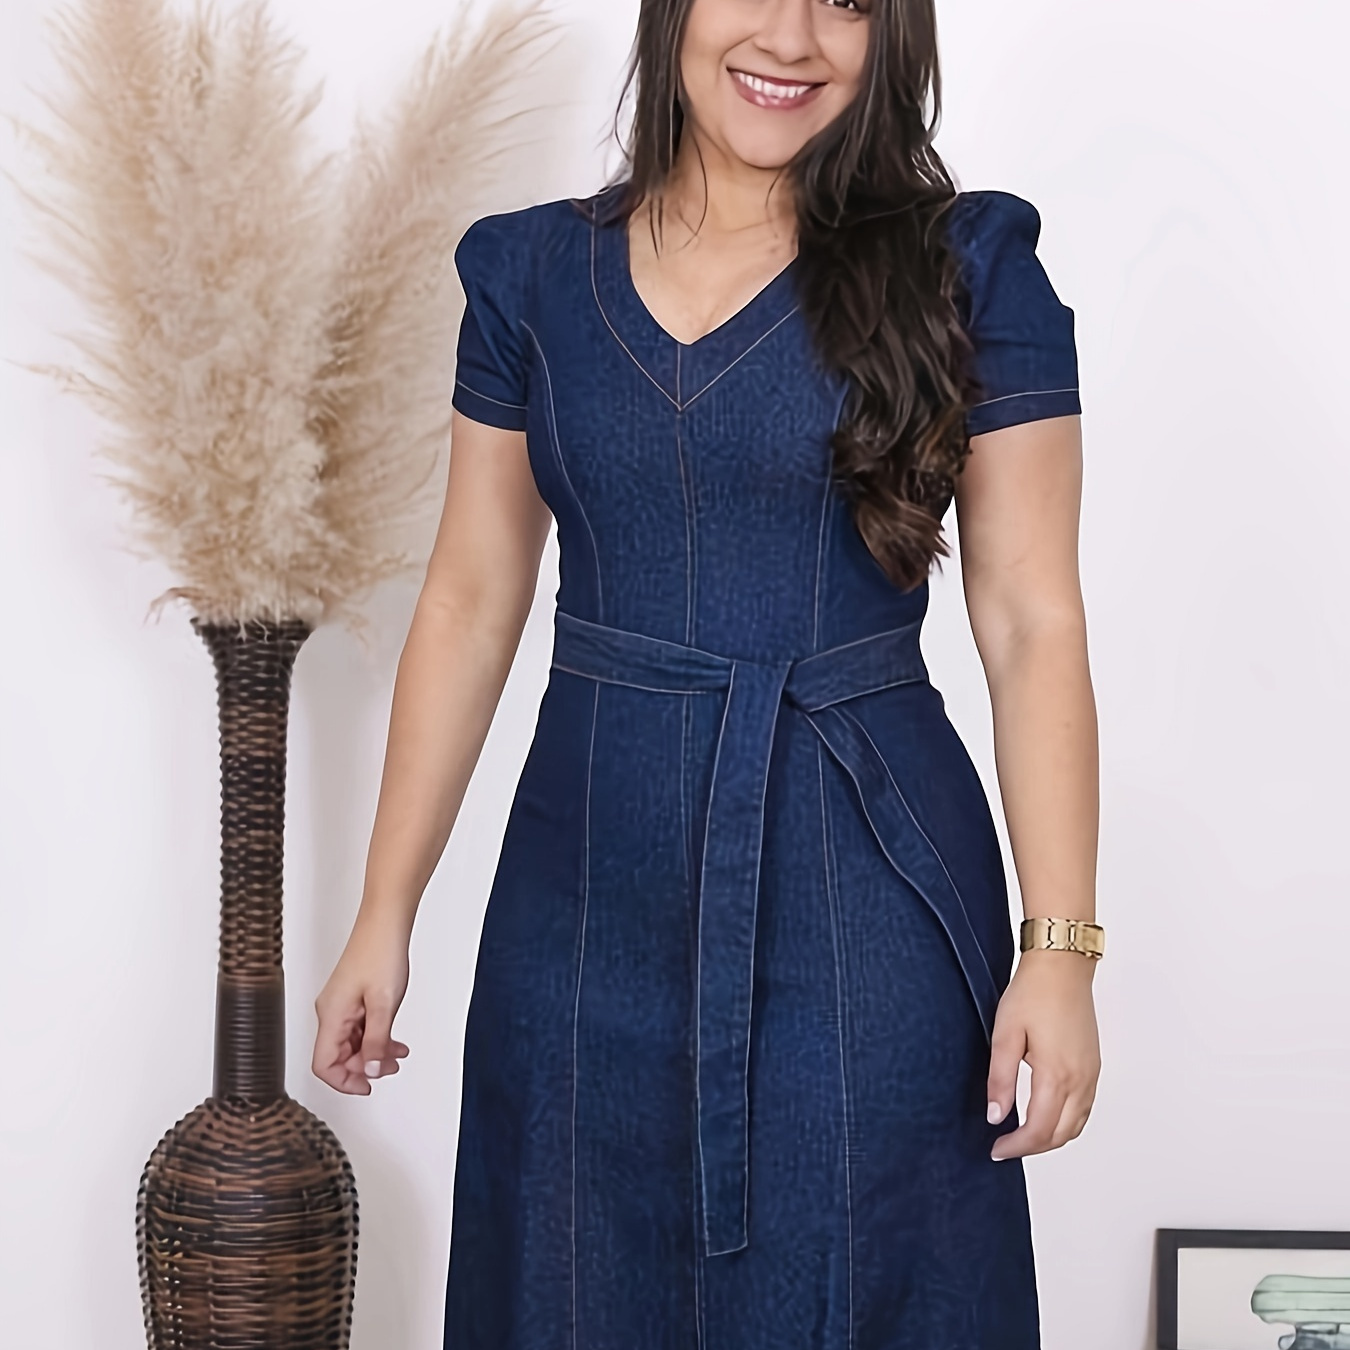 

Women's Plus Size Elegant V-neck Denim Dress, Fashionable Midi-length With Belt Detail, Classic Blue Jean Style – Versatile Casual Wear